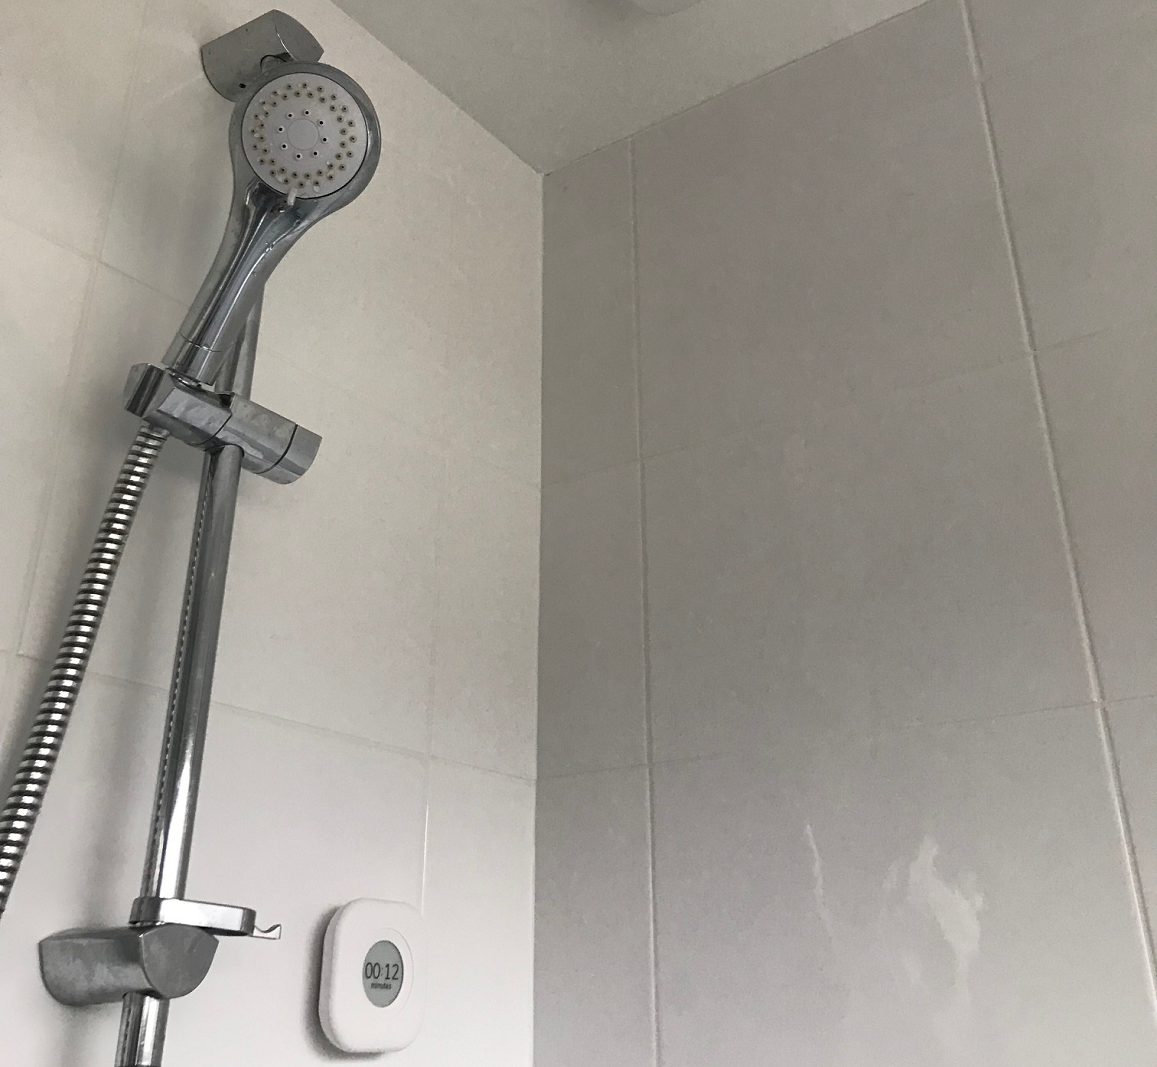 Shower monitor